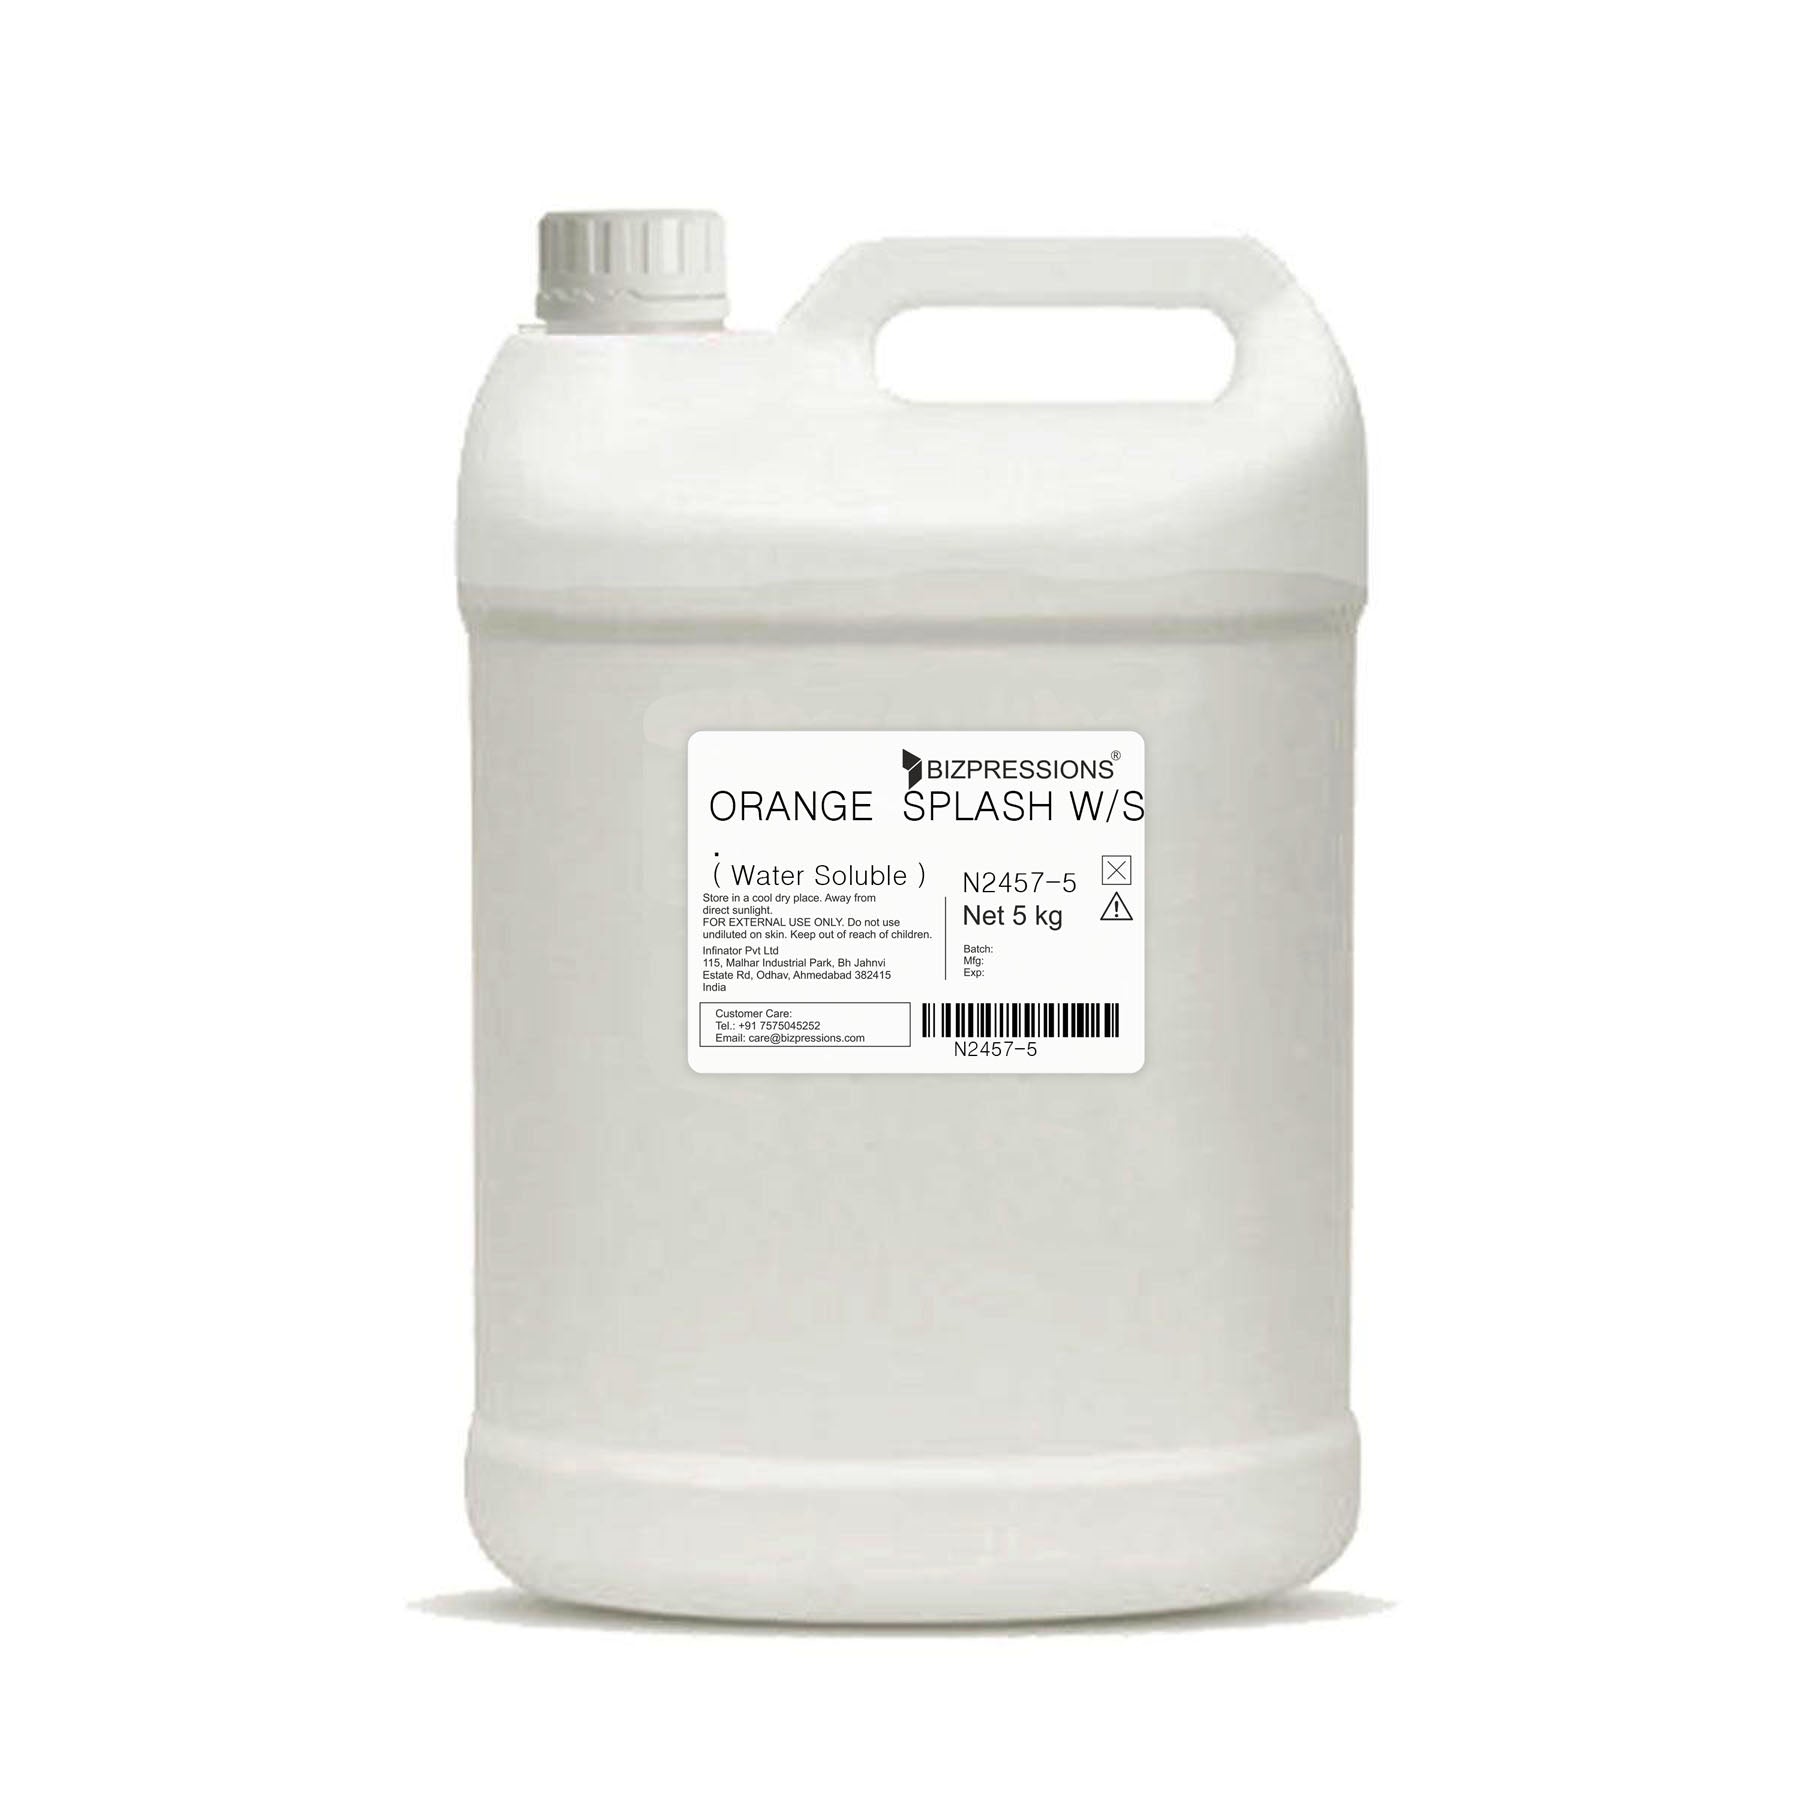 ORANGE SPLASH W/S - Fragrance ( Water Soluble ) - 5 kg